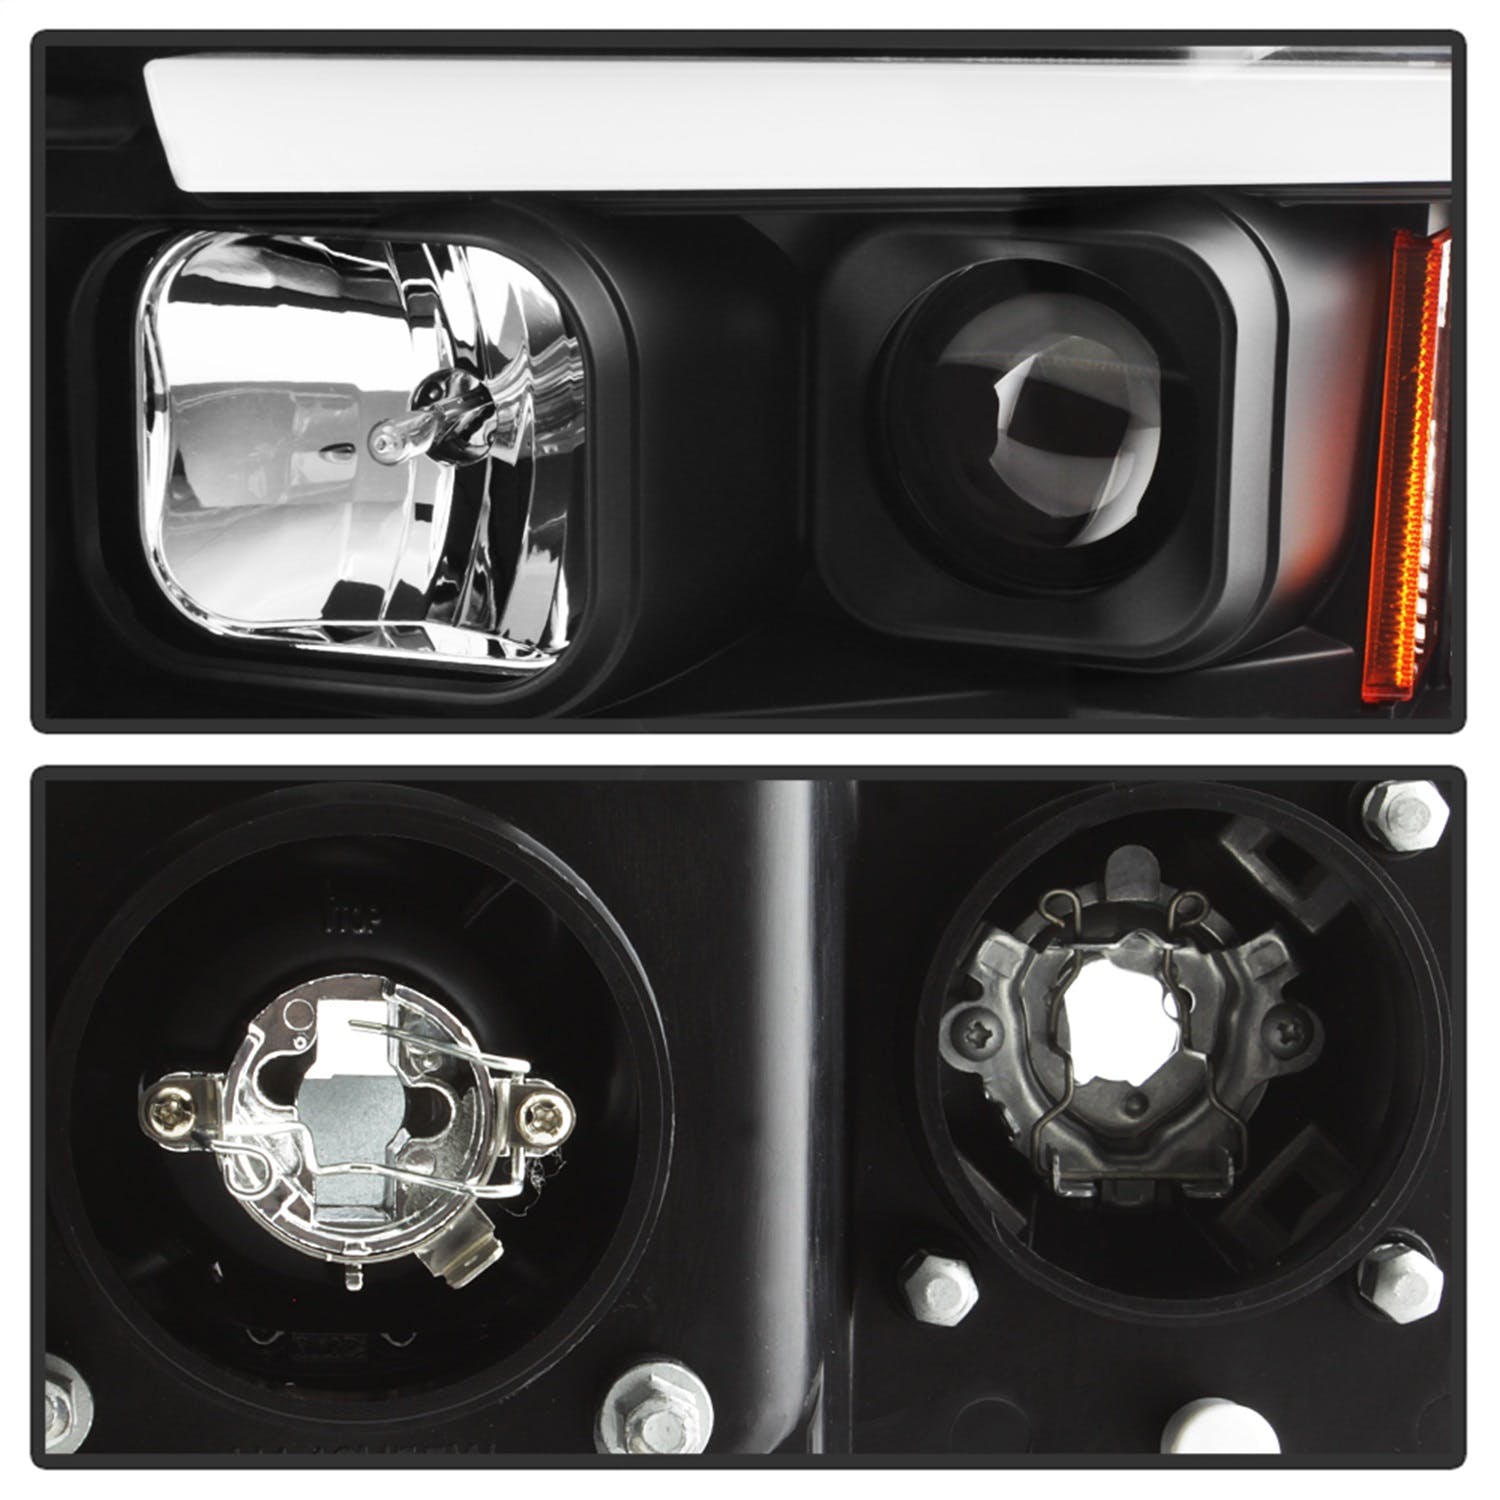 Spyder Auto 5084606 (Spyder) Dodge Ram 1500 02-05/Ram 2500/3500 03-05 Light Bar Projector Headlights